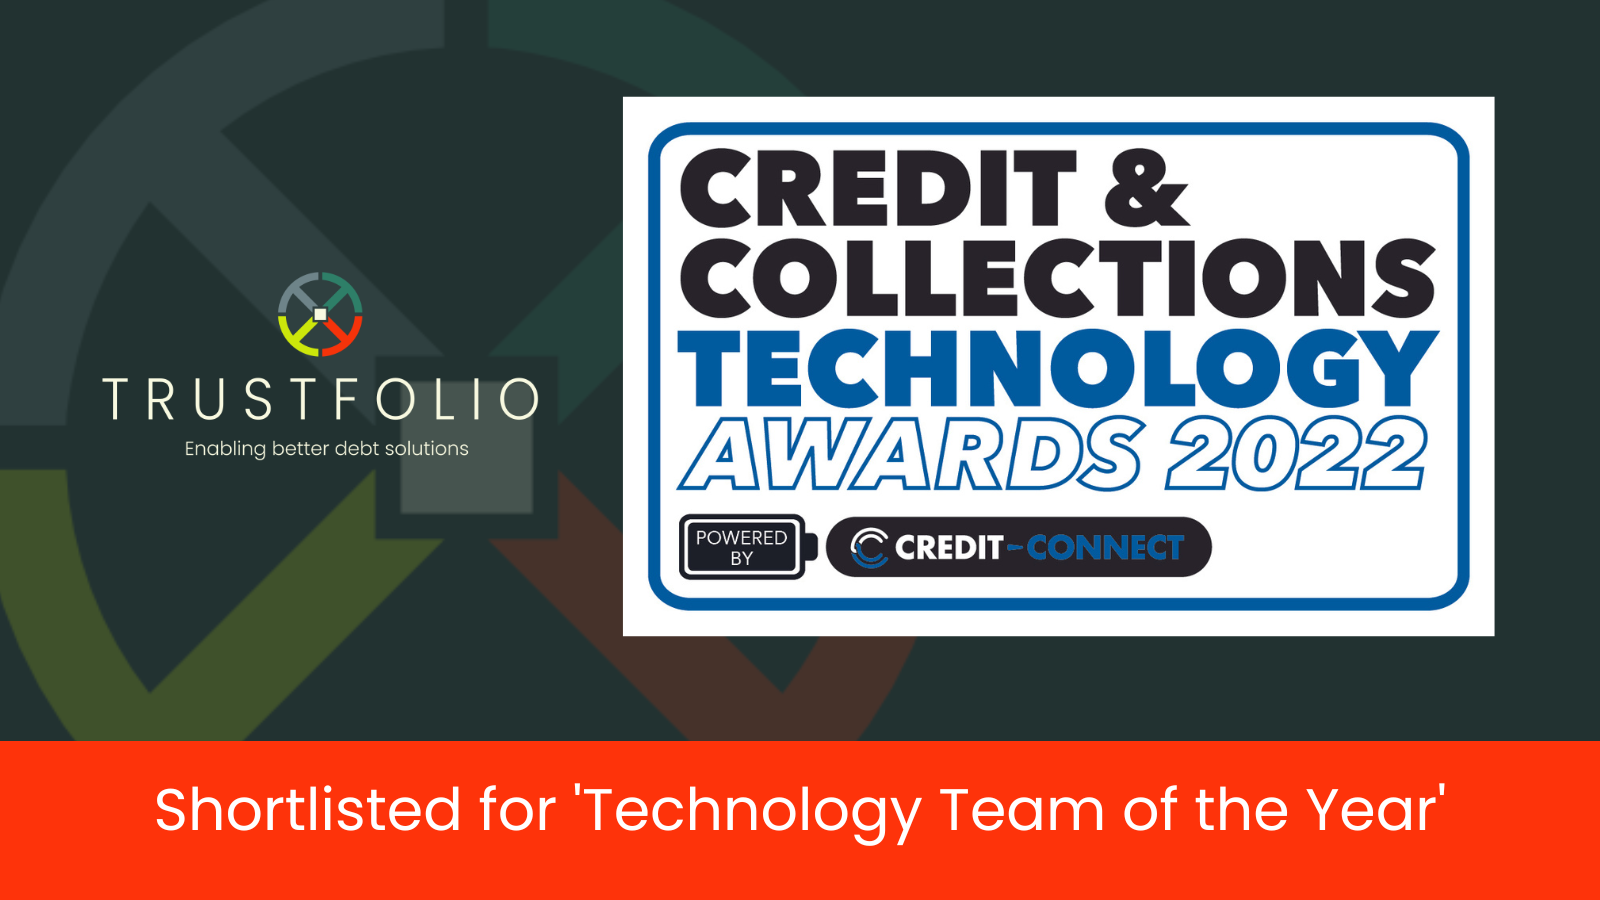 Trustfolio C&C Tech Awards 2022